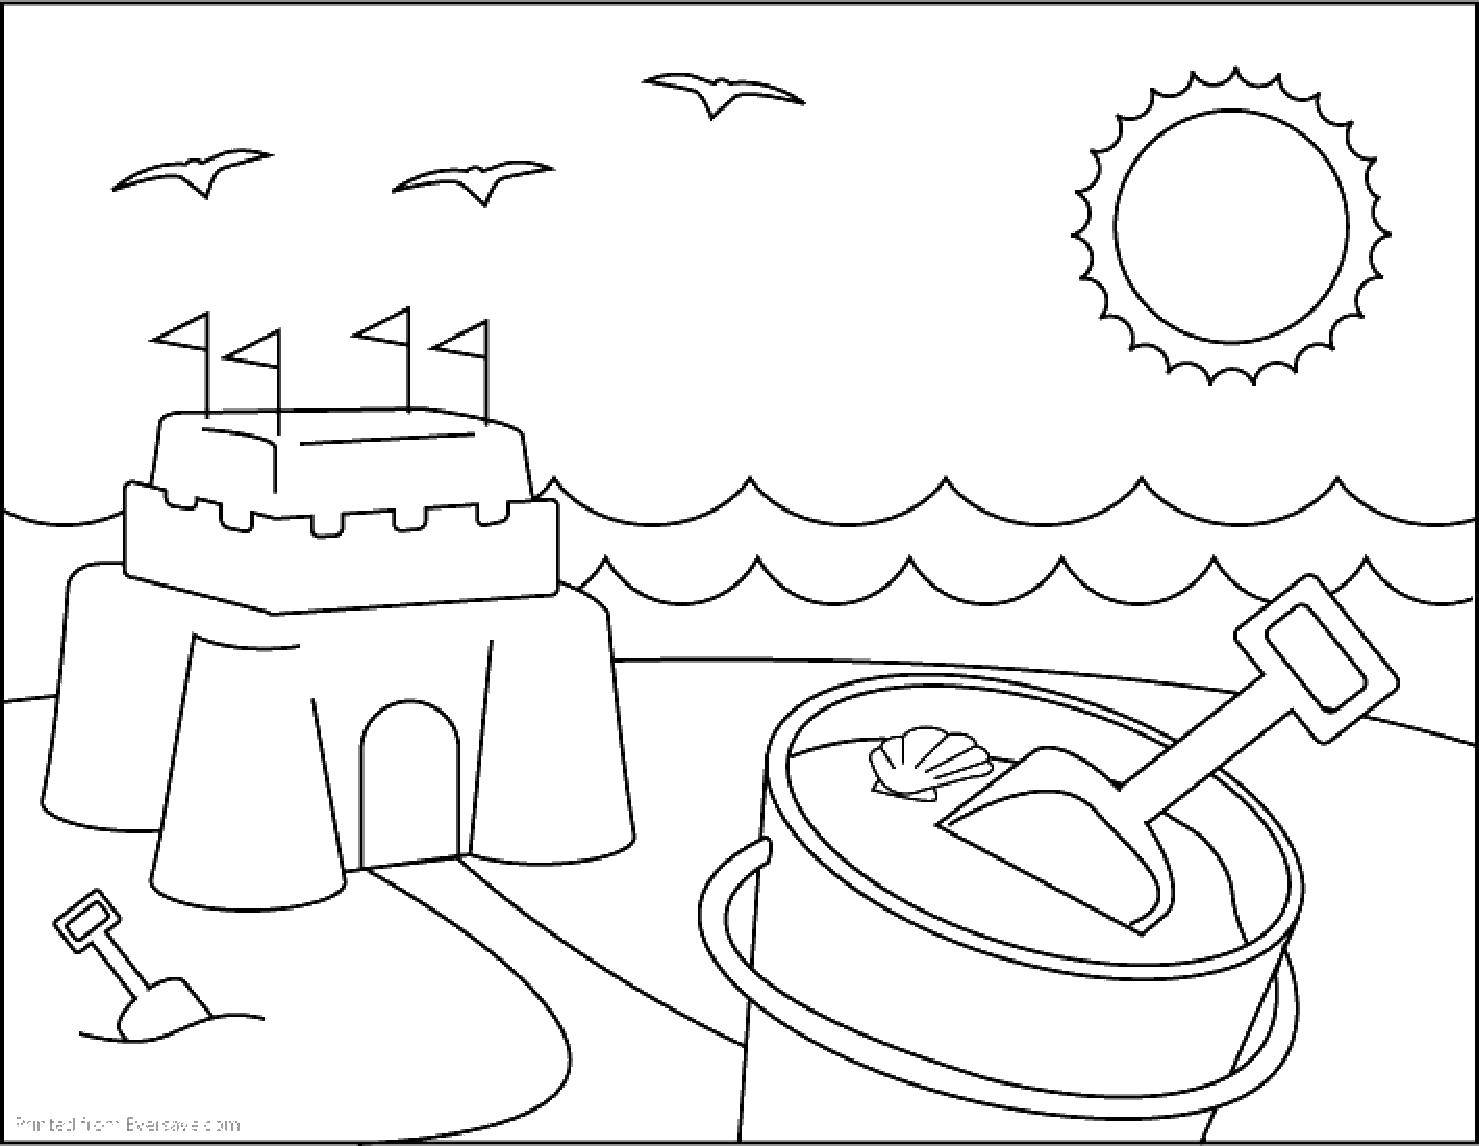 Название: Раскраска Песочный замок и ведро. Категория: Лето. Теги: песок, солнце, ведро.